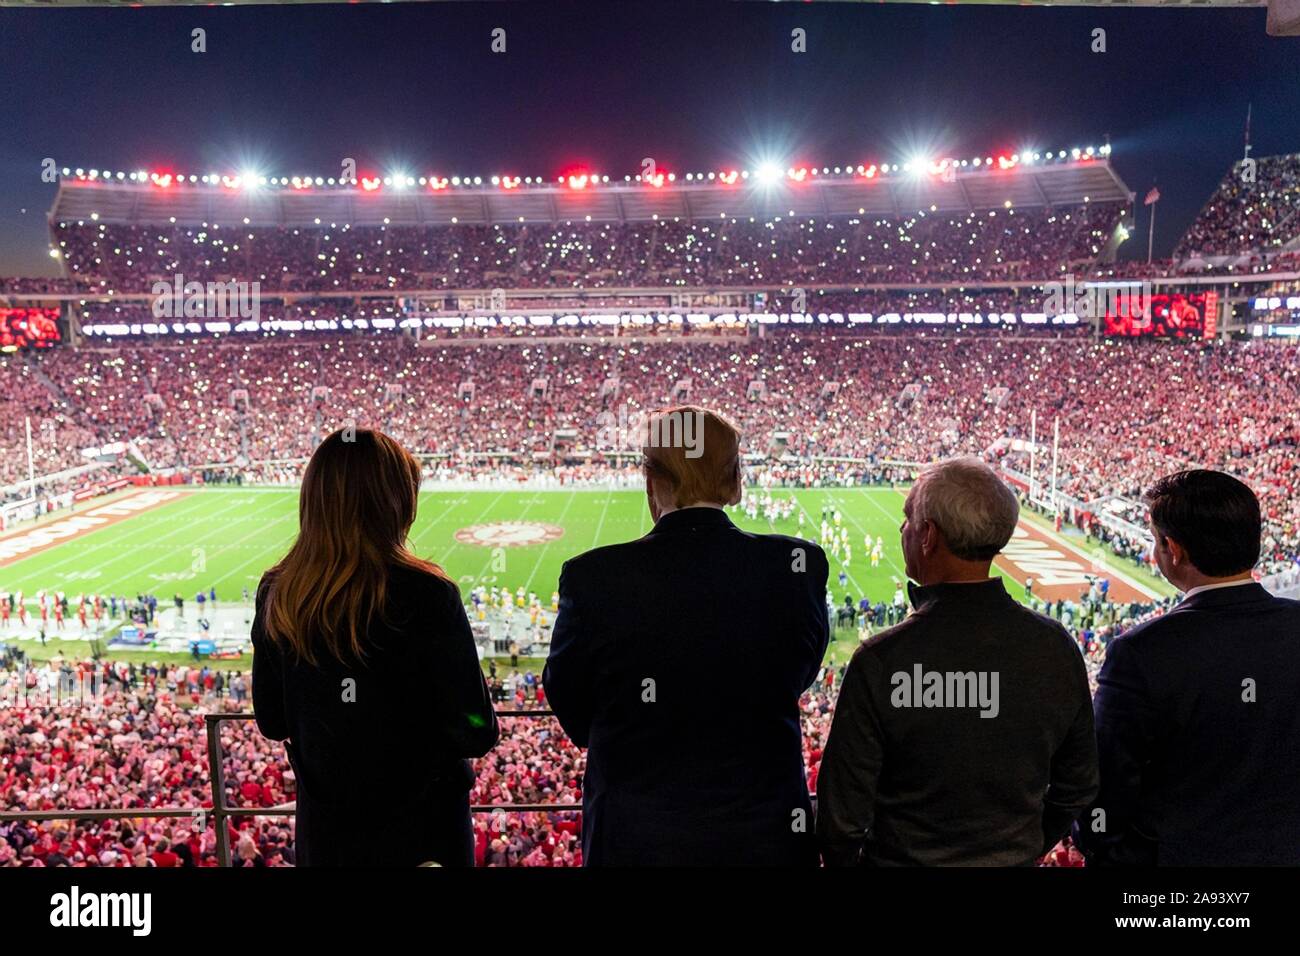 U.S President Donald Trump and First Lady Melania Trump watch the University of Alabama vs Louisiana State University football game at Bryant-Denny Stadium November 9, 2019 in Tuscaloosa, Alabama. Stock Photo